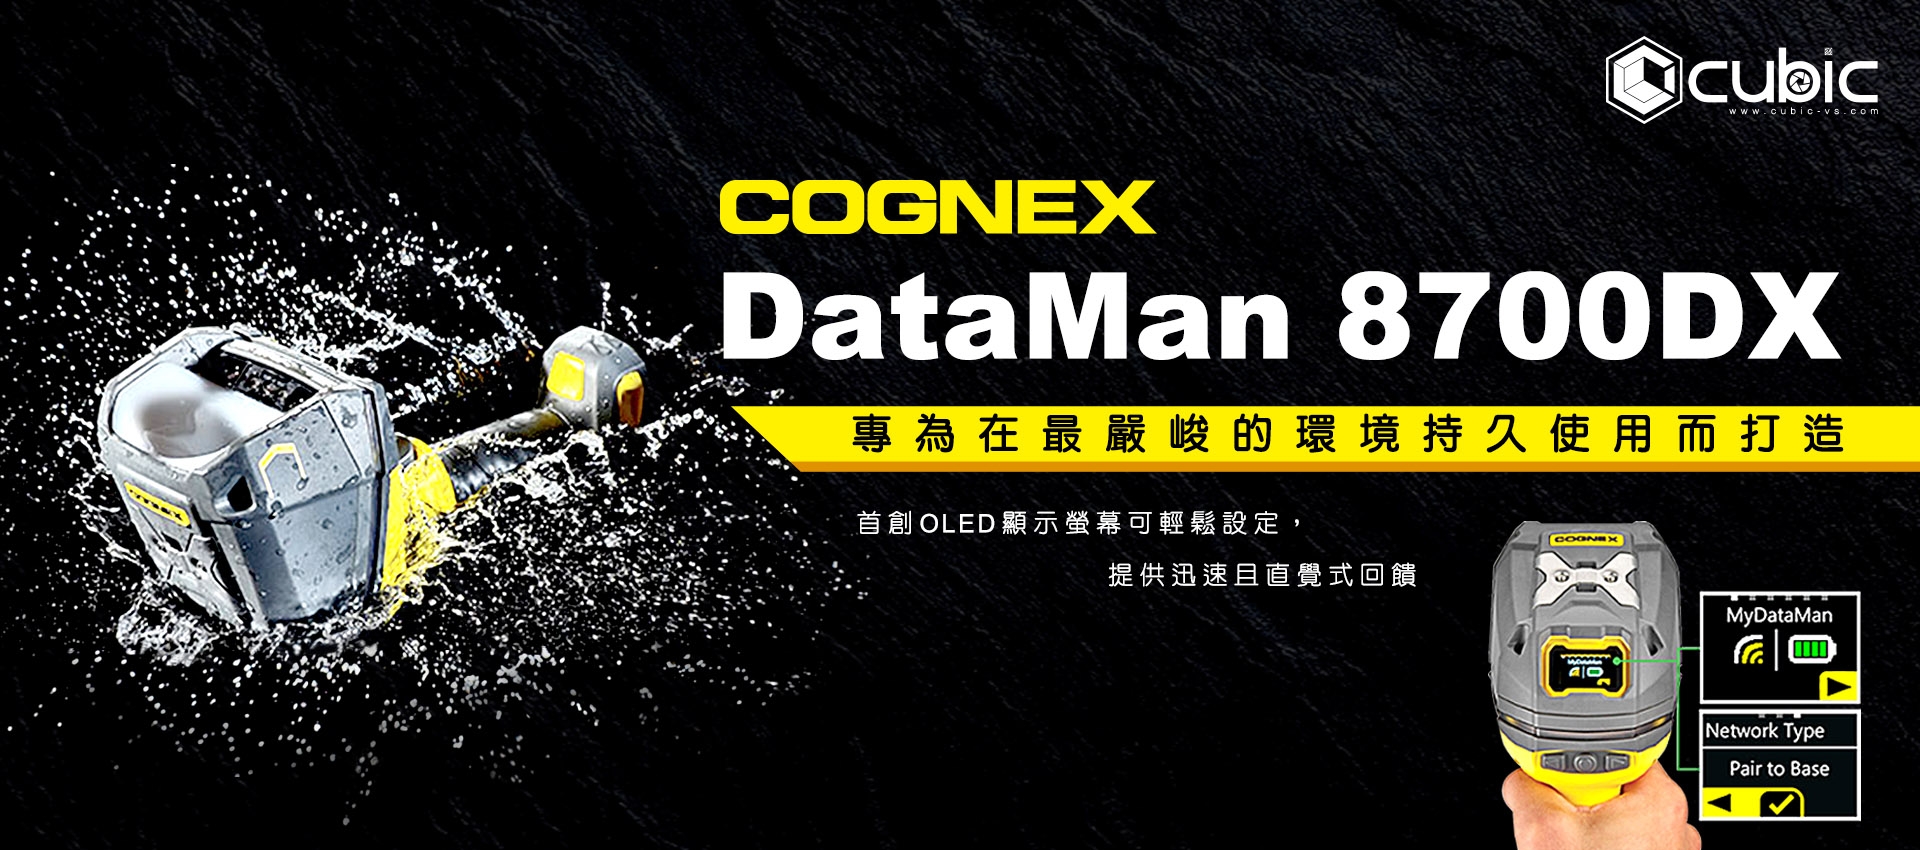 COGNEX DataMan 8700DX